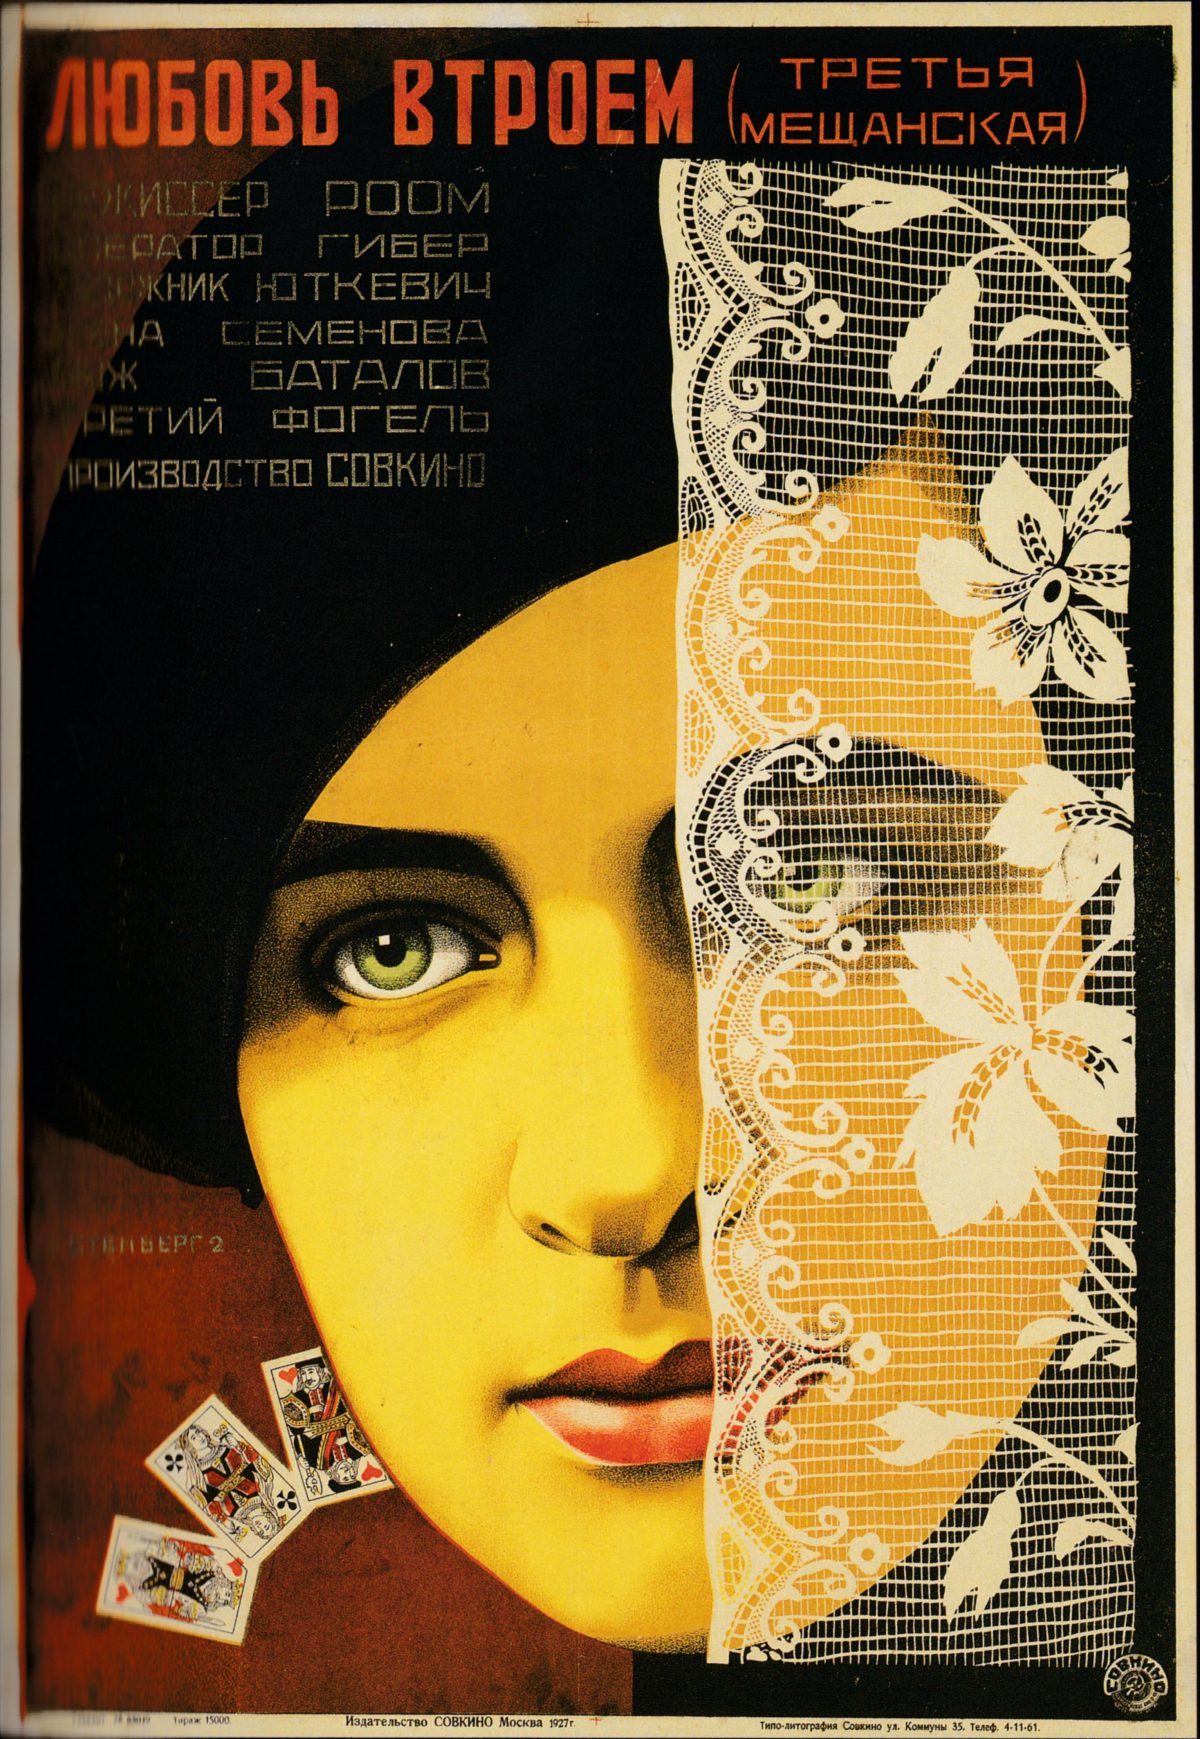 Soviet Union film posters